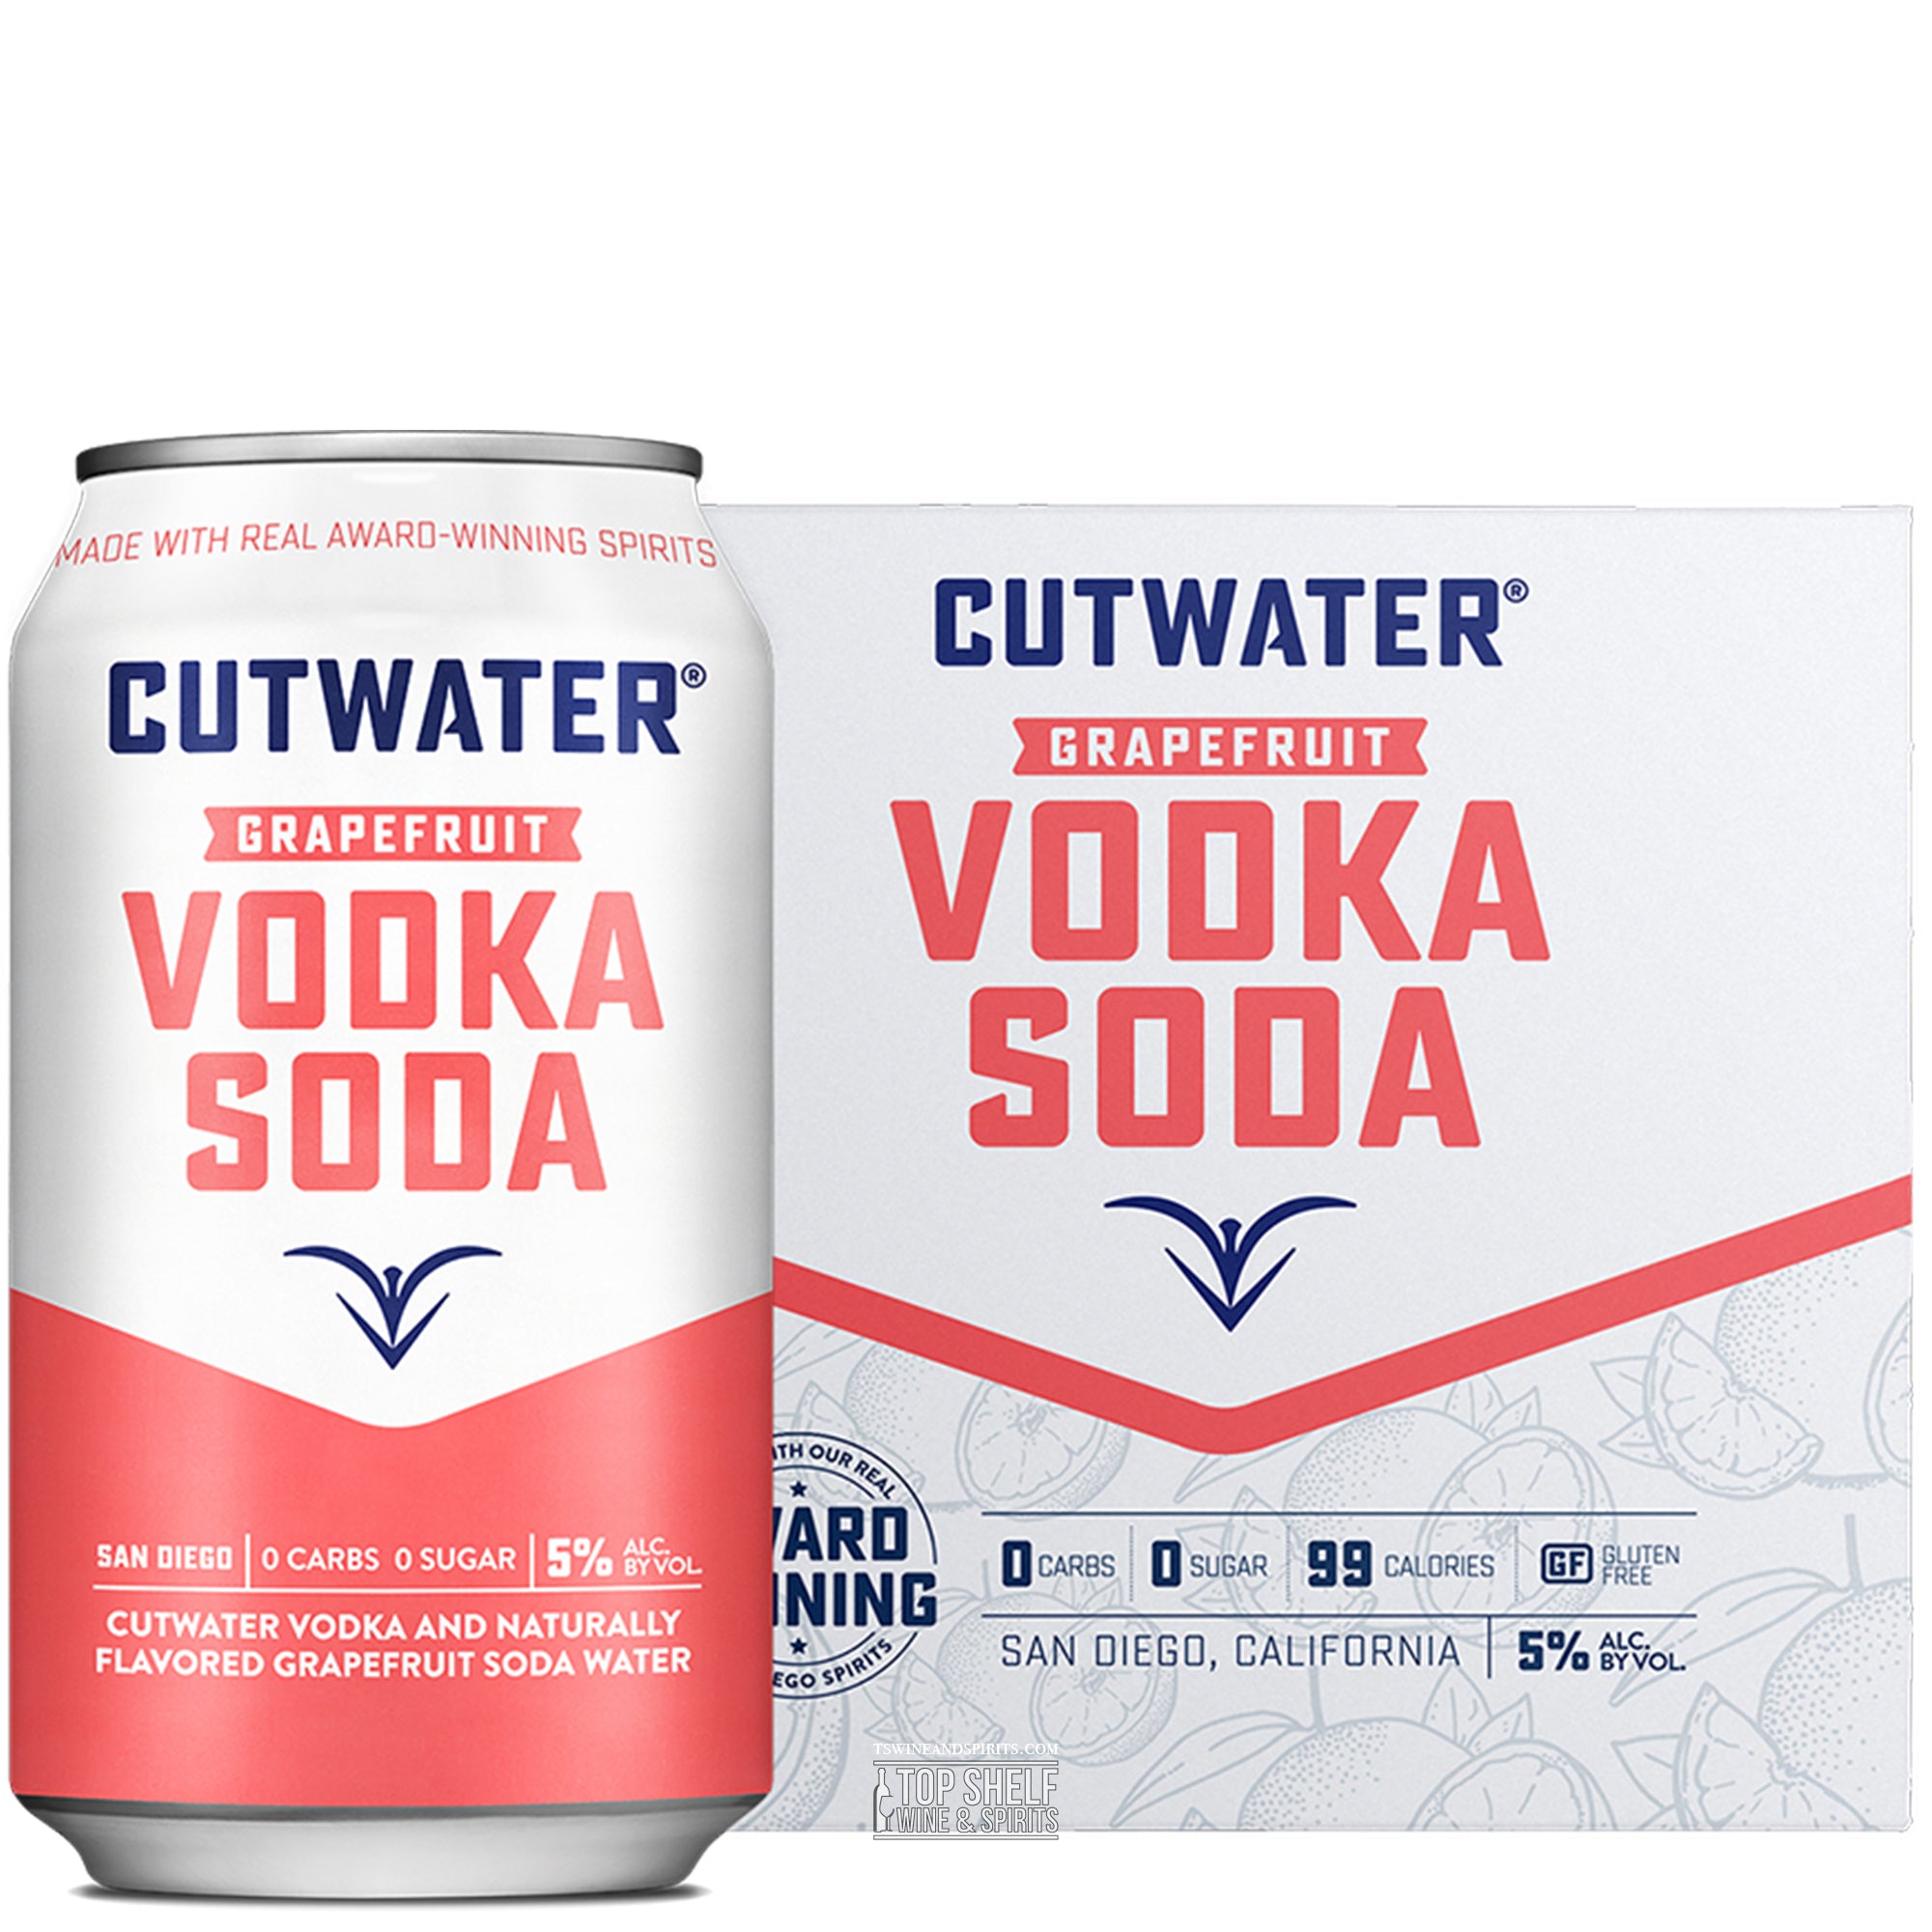 Cutwater Grapefruit Vodka Soda 4 pack